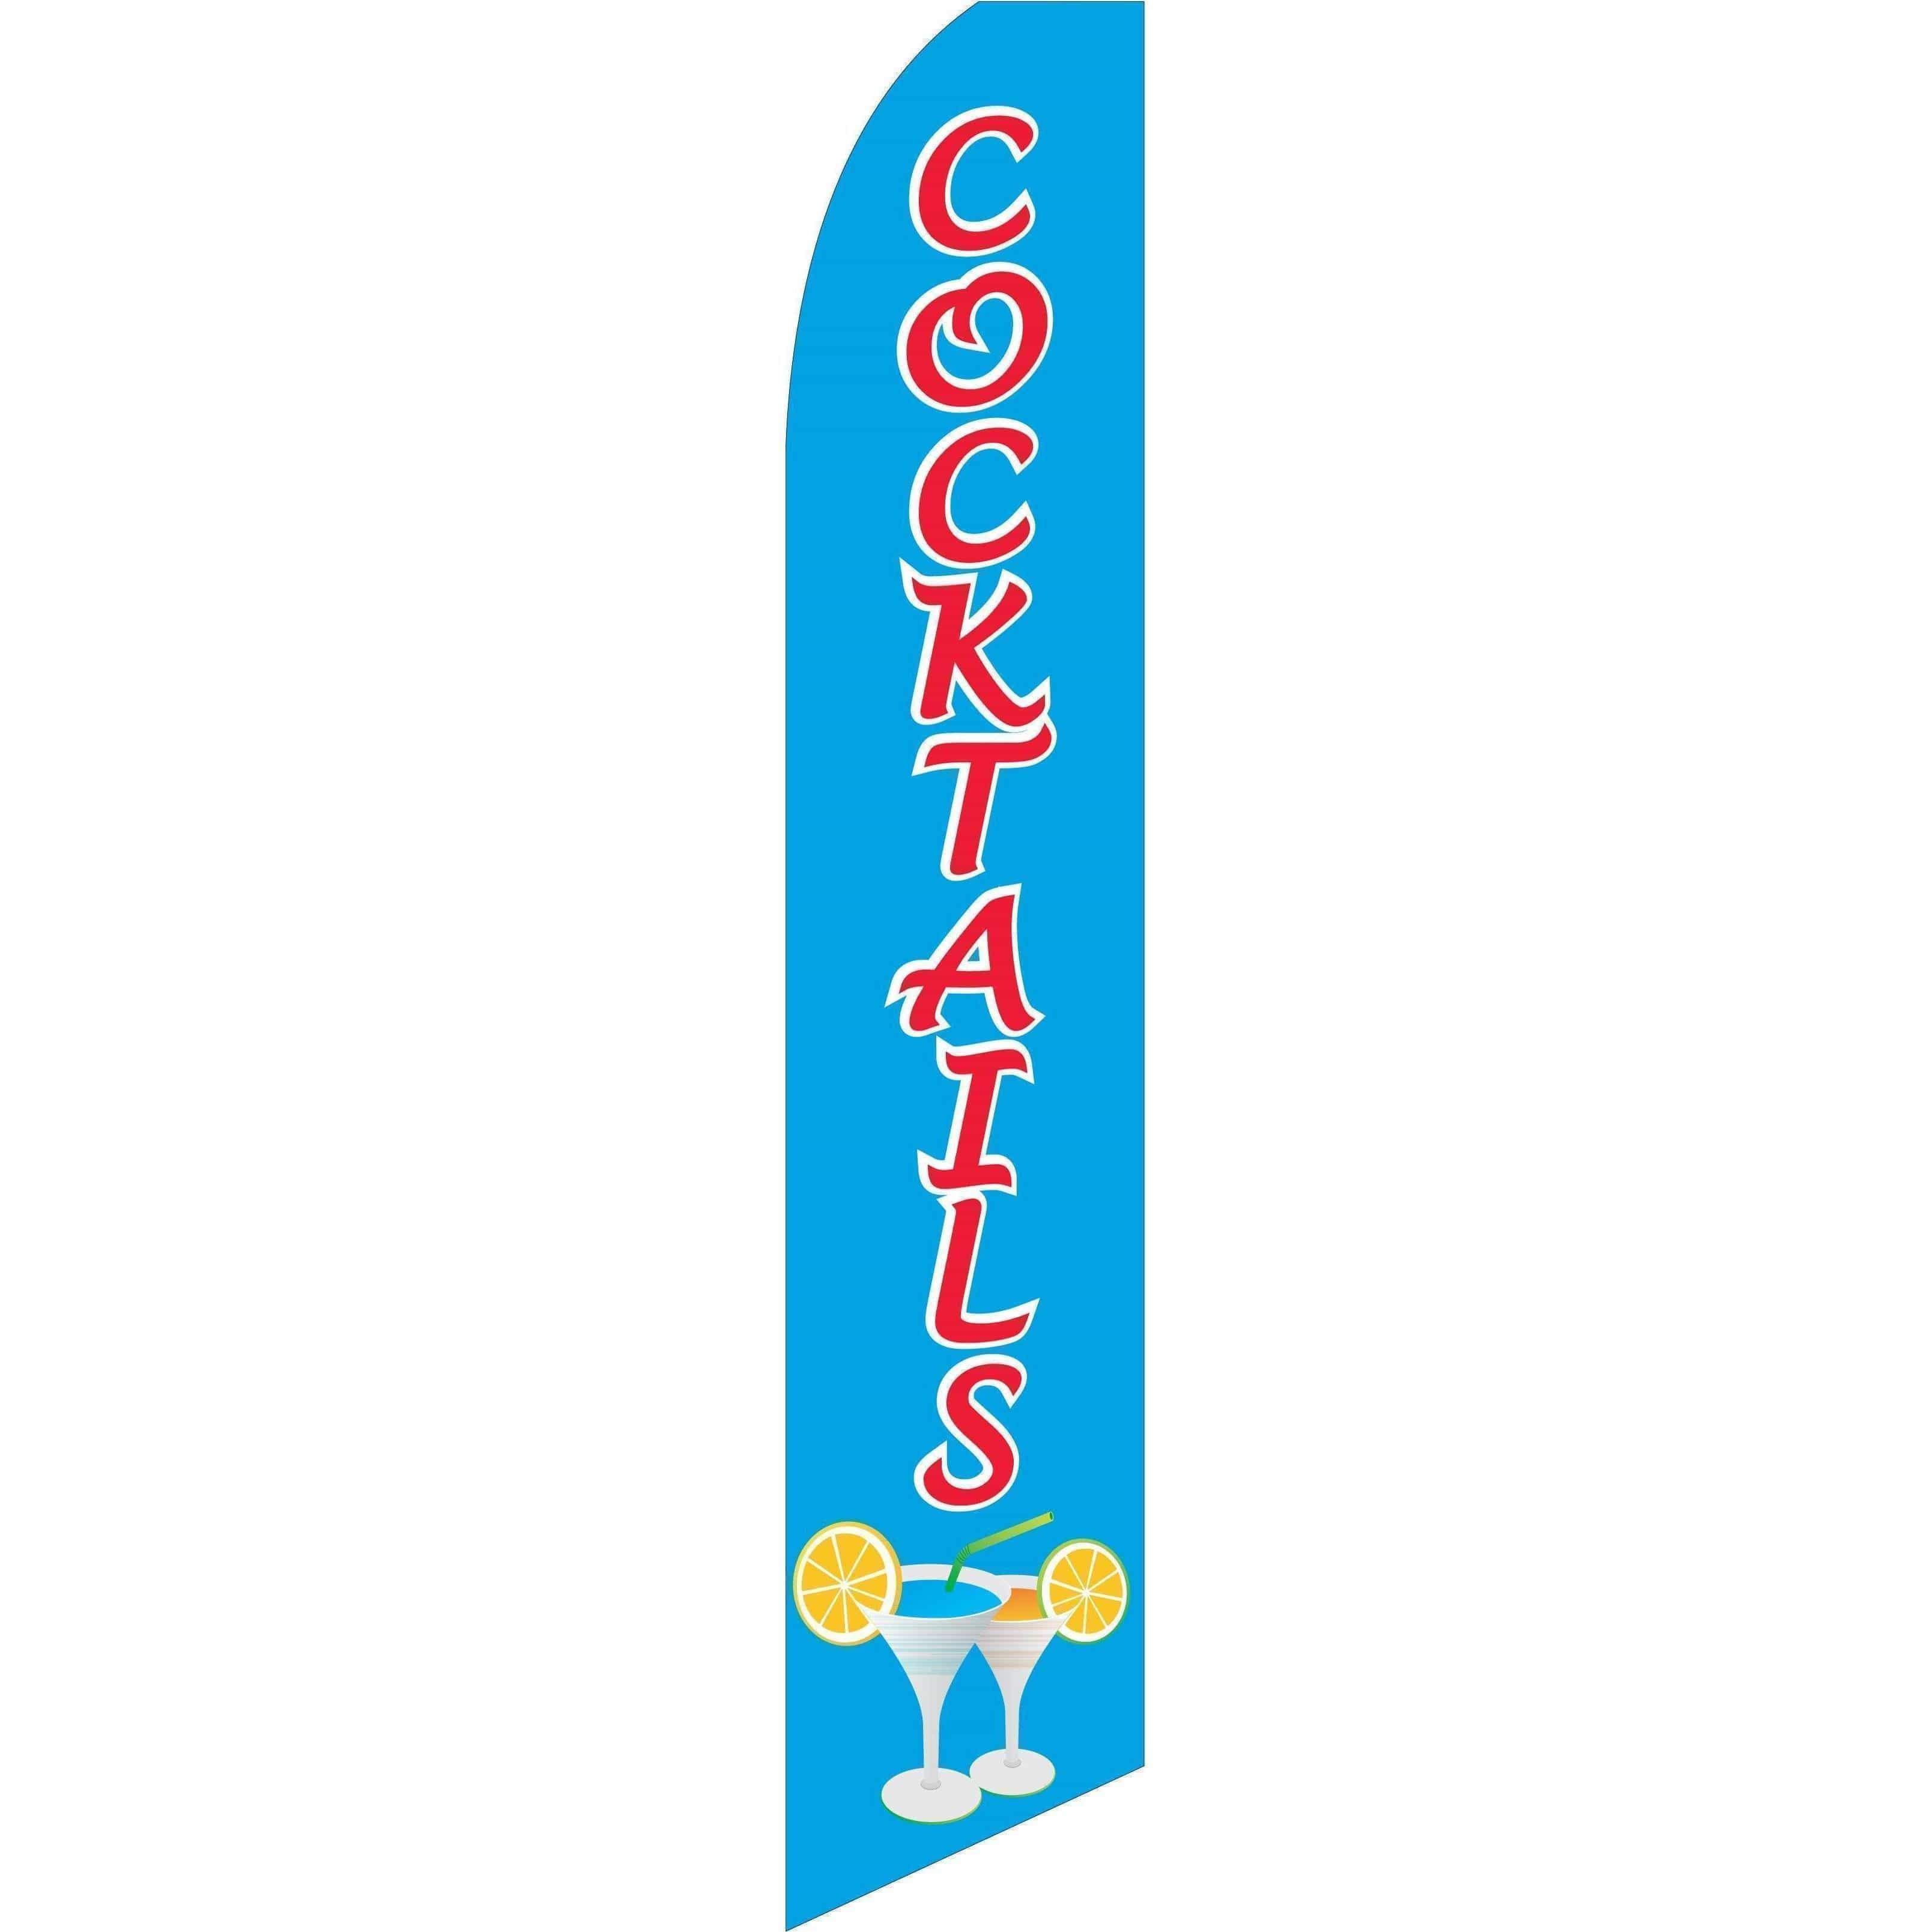 Cocktails Advertising Flag (Flag Only).